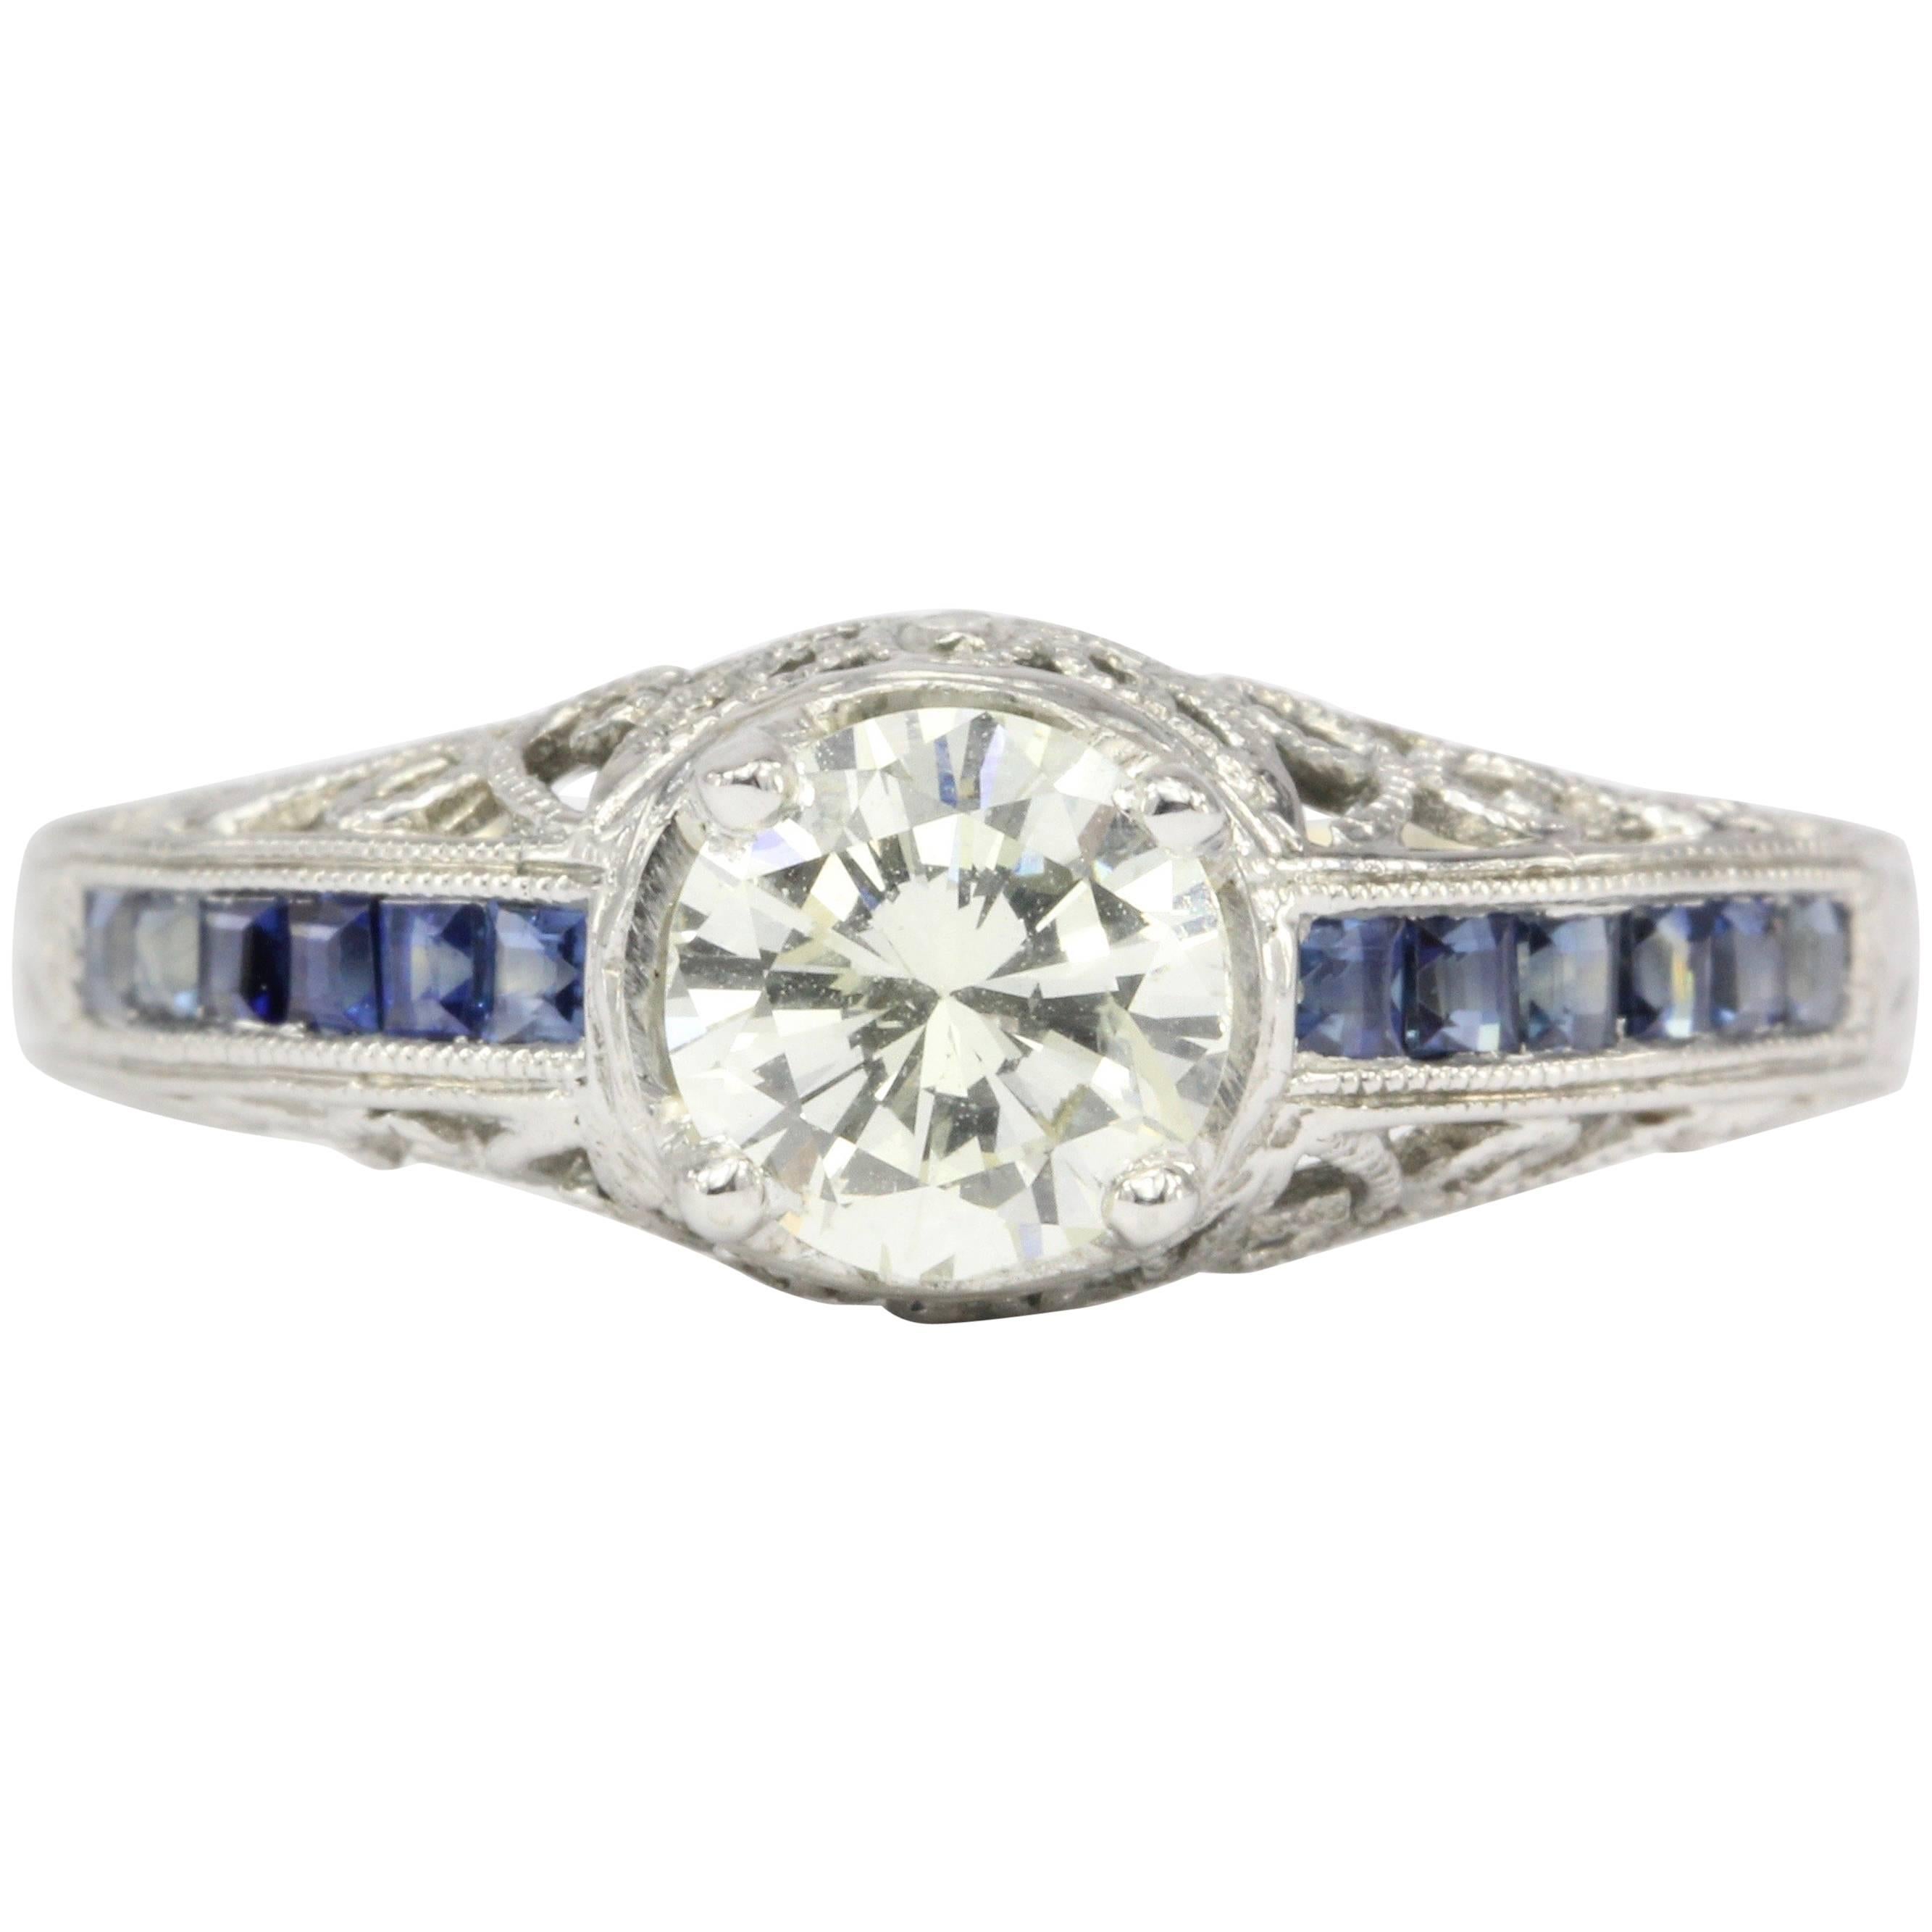 Art Deco Style White Gold 1 Carat Diamond and Sapphire Ring